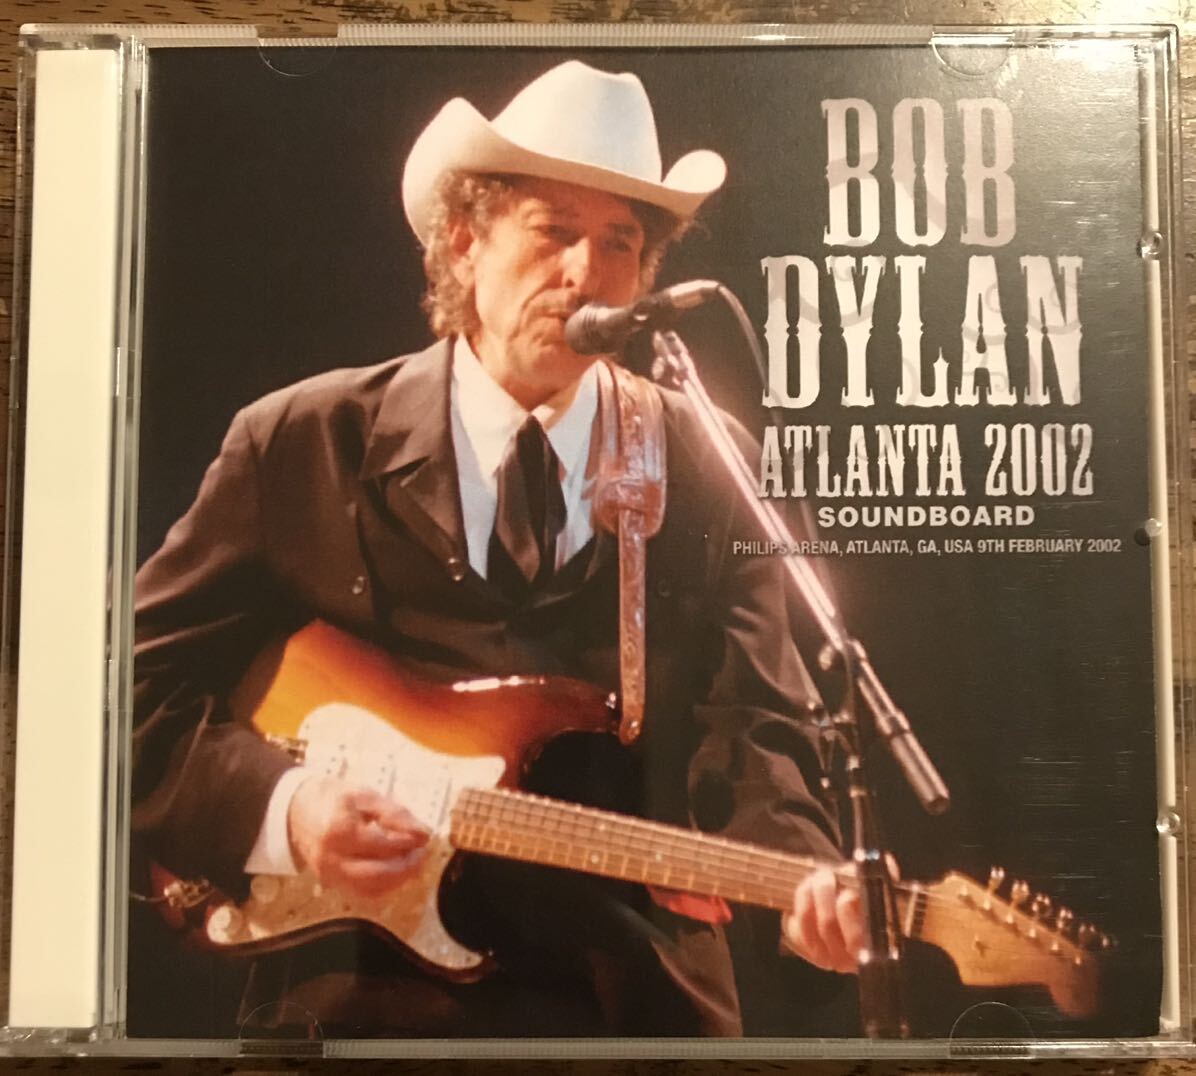 Bob Dylan / Atlanta 2002 Soundboard / 2CDR / Philip’s Arena, Atlanta, GA, 9th February 2002 / Stereo Soundboard Recording / ボブ_画像1